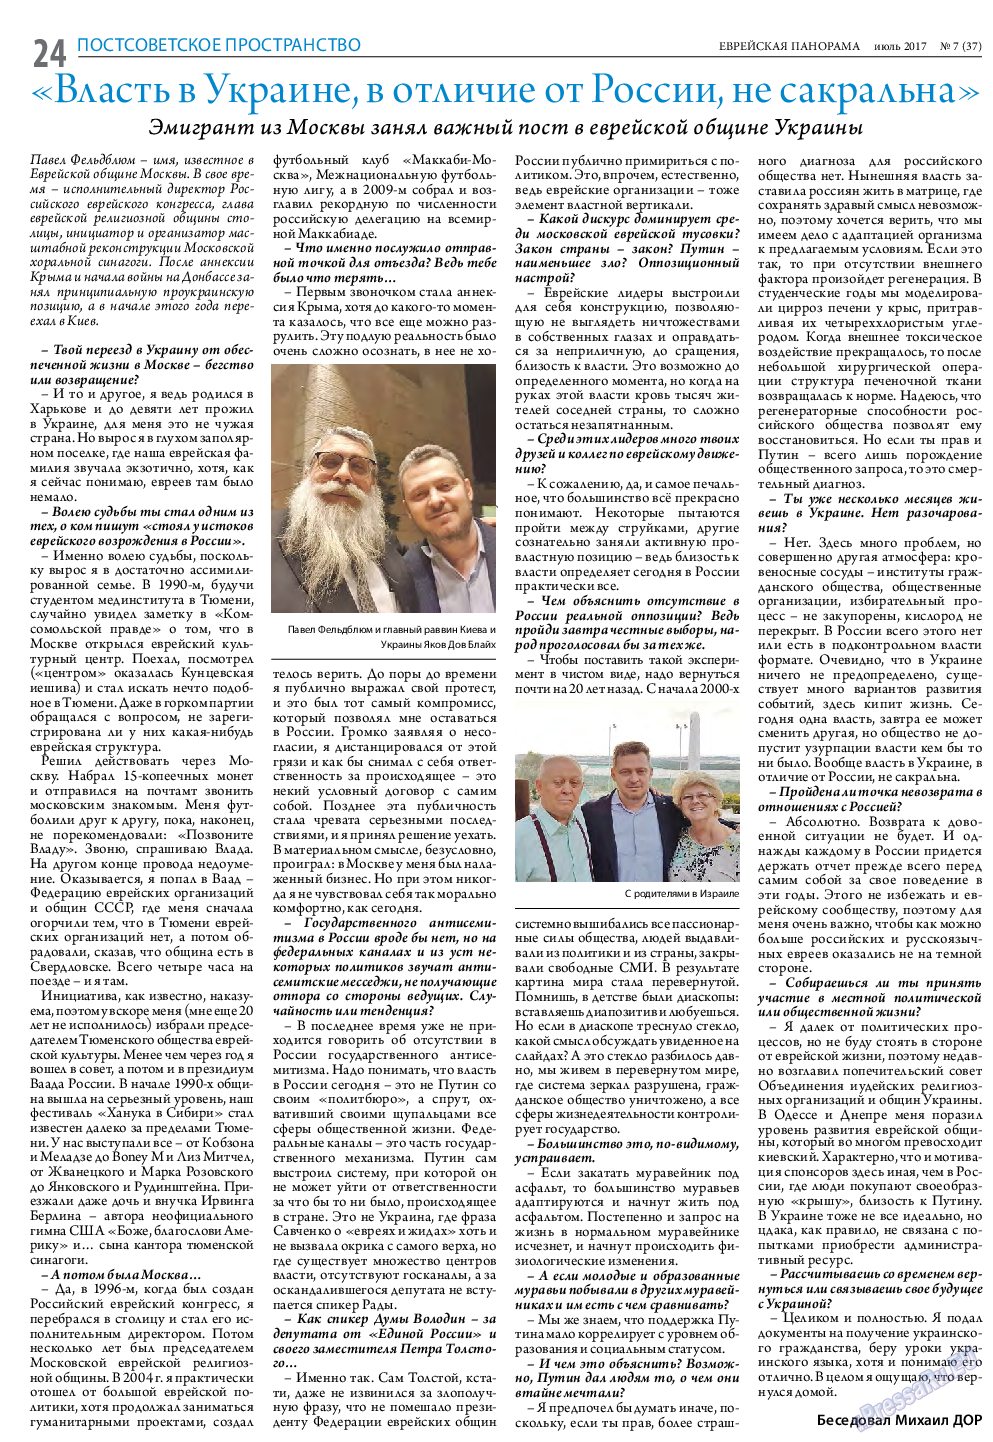 Еврейская панорама, газета. 2017 №7 стр.24